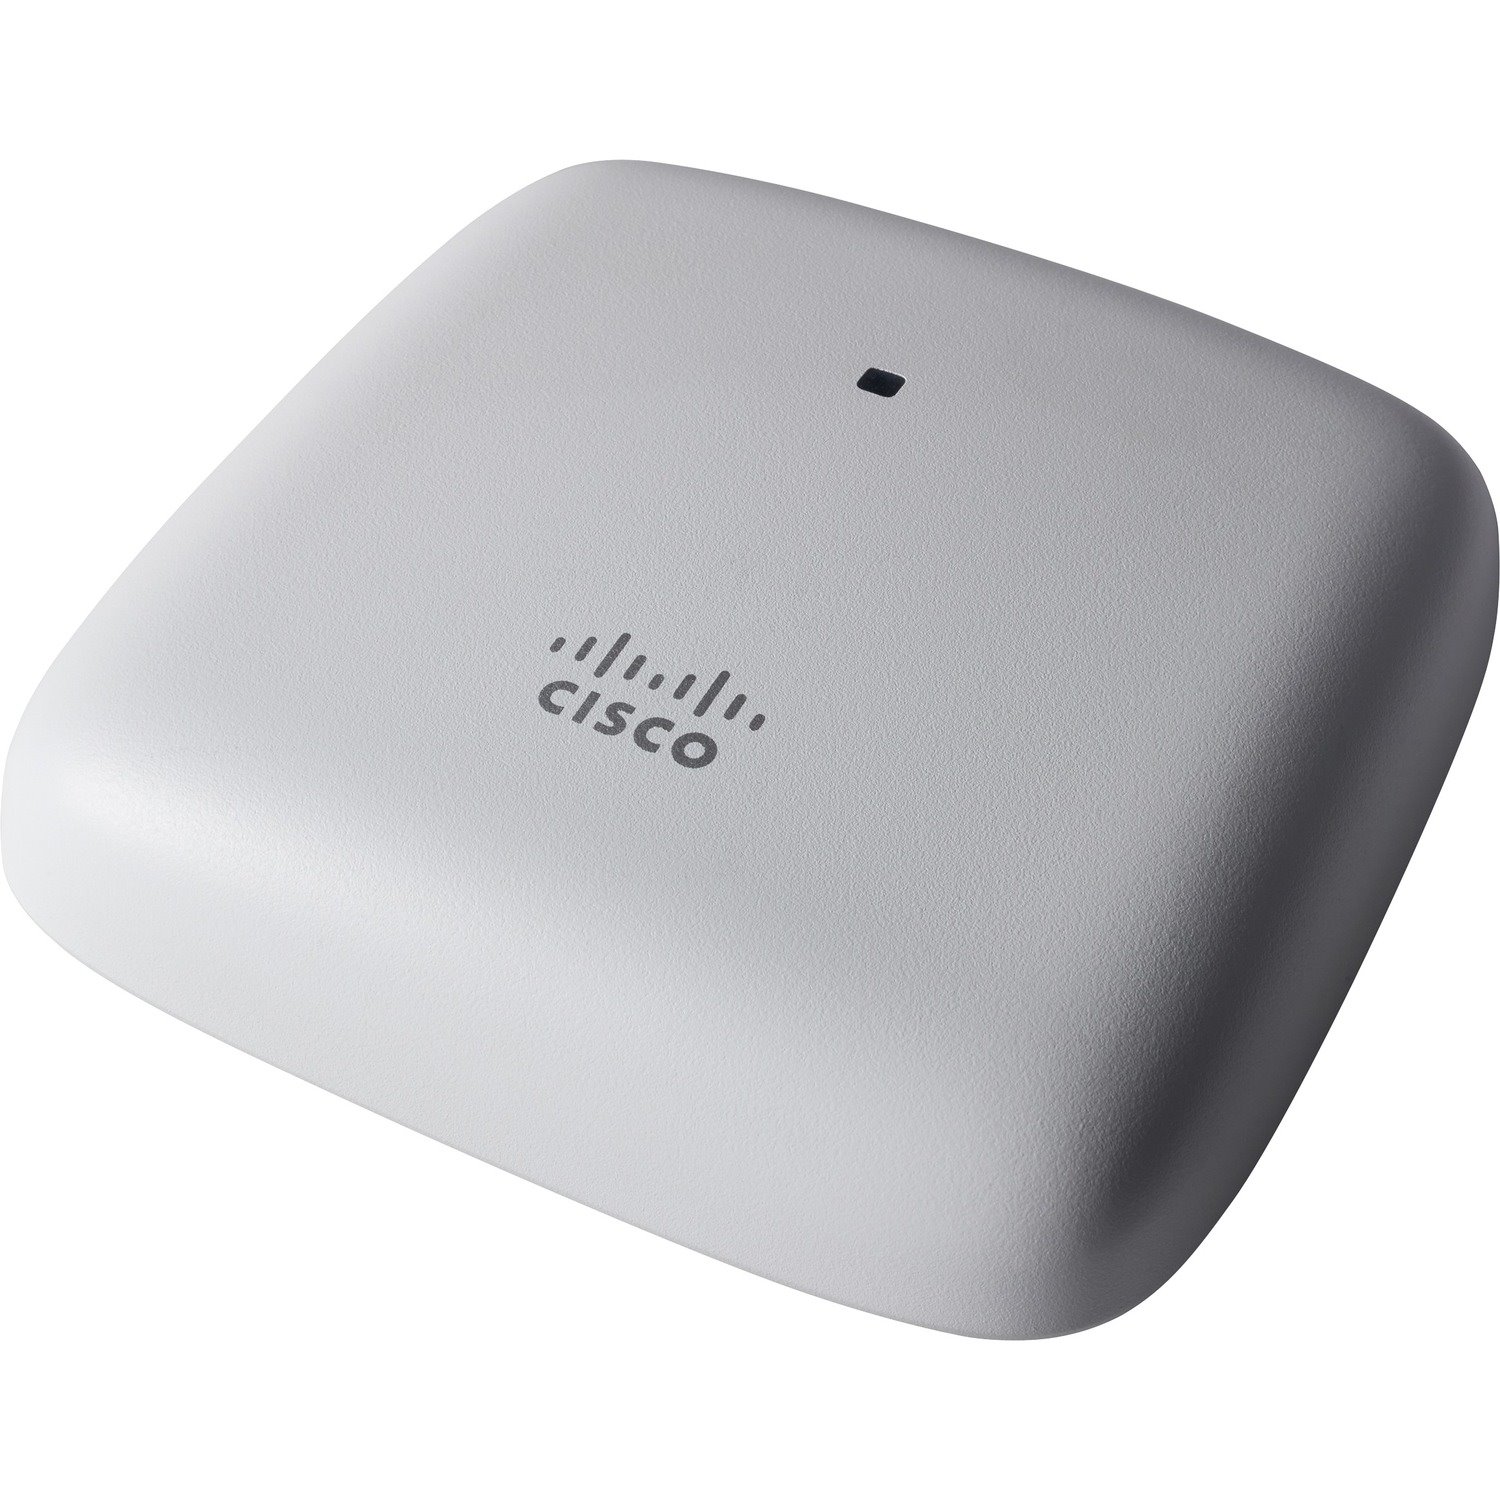 Cisco Aironet 1815i IEEE 802.11ac 867 Mbit/s Wireless Access Point